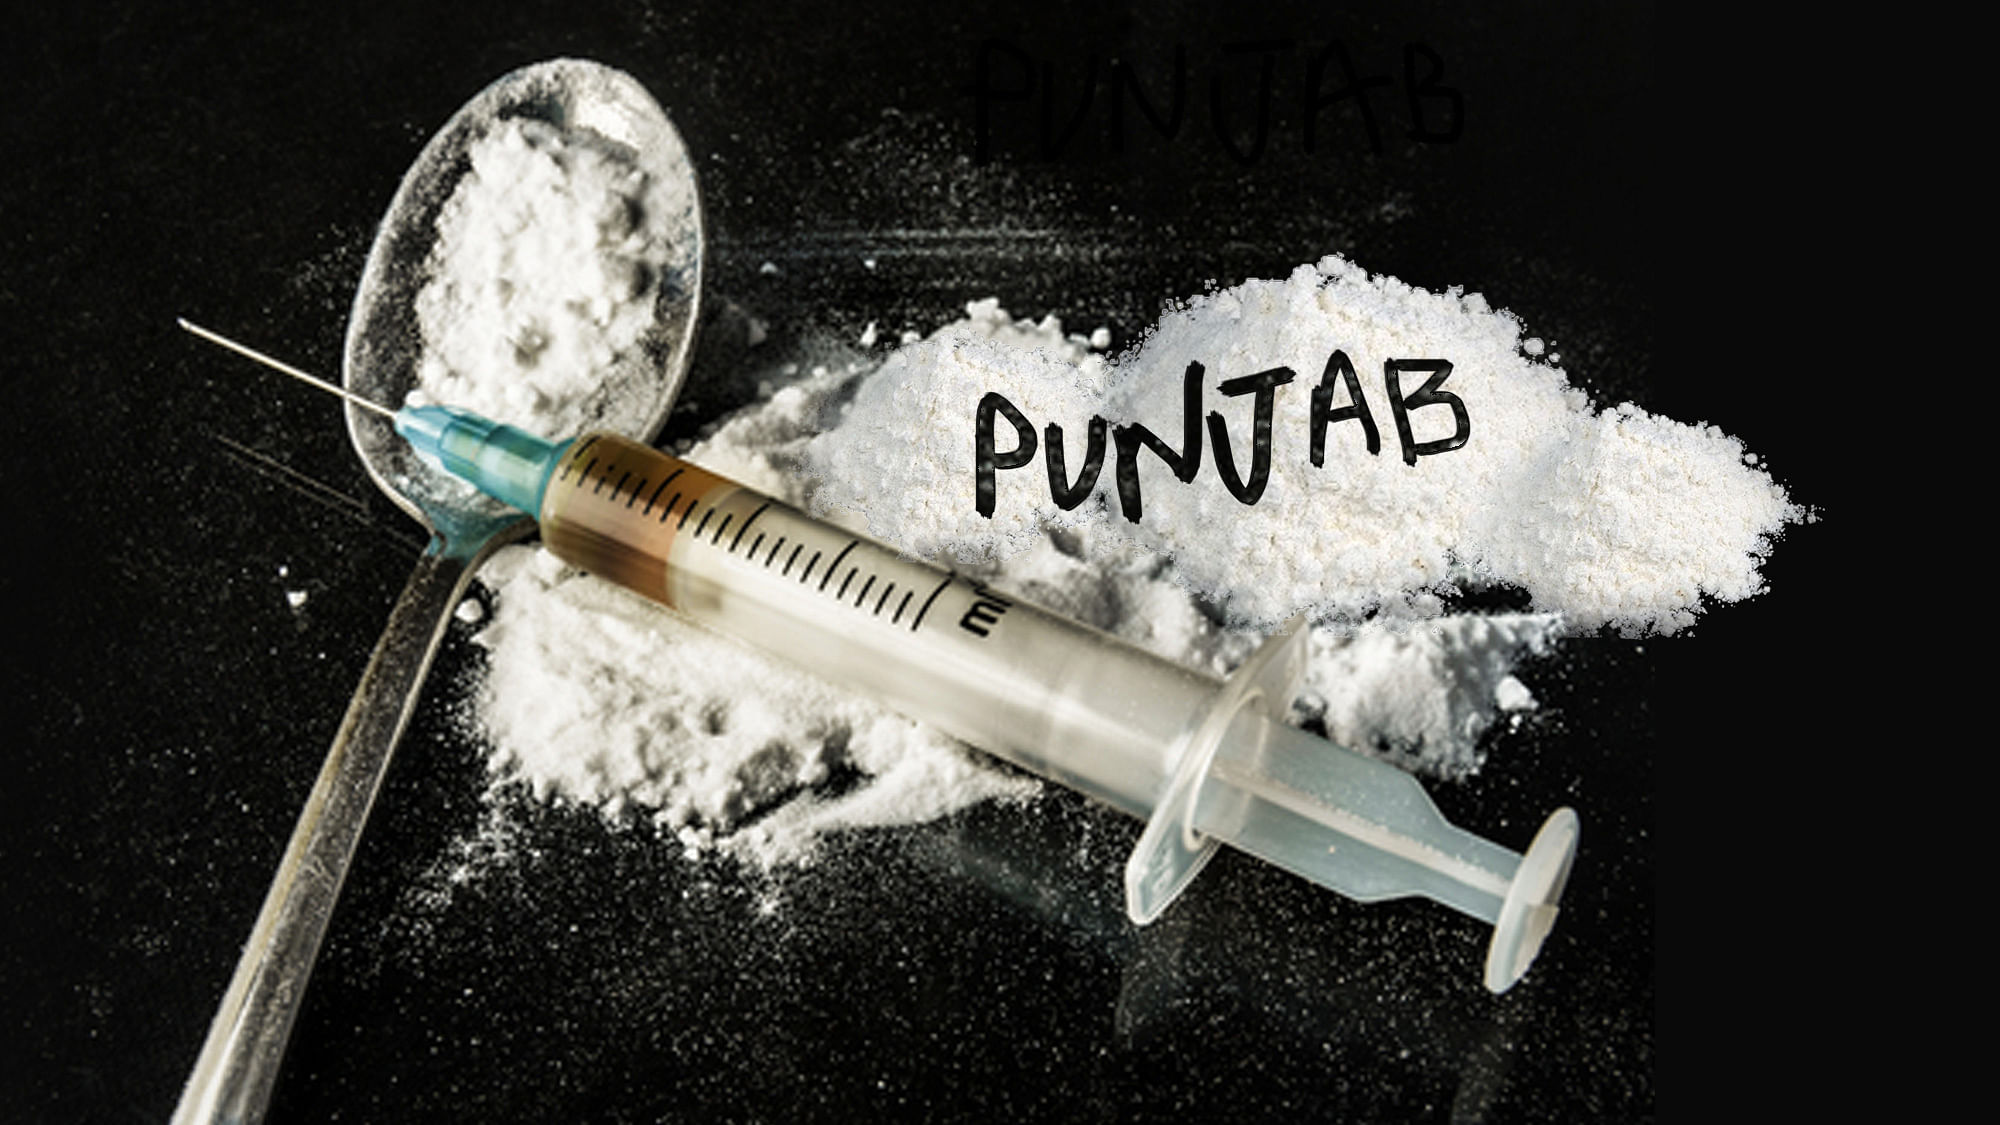 Punjab's Drug Menace: Easy Access to Poison Without a Prescription